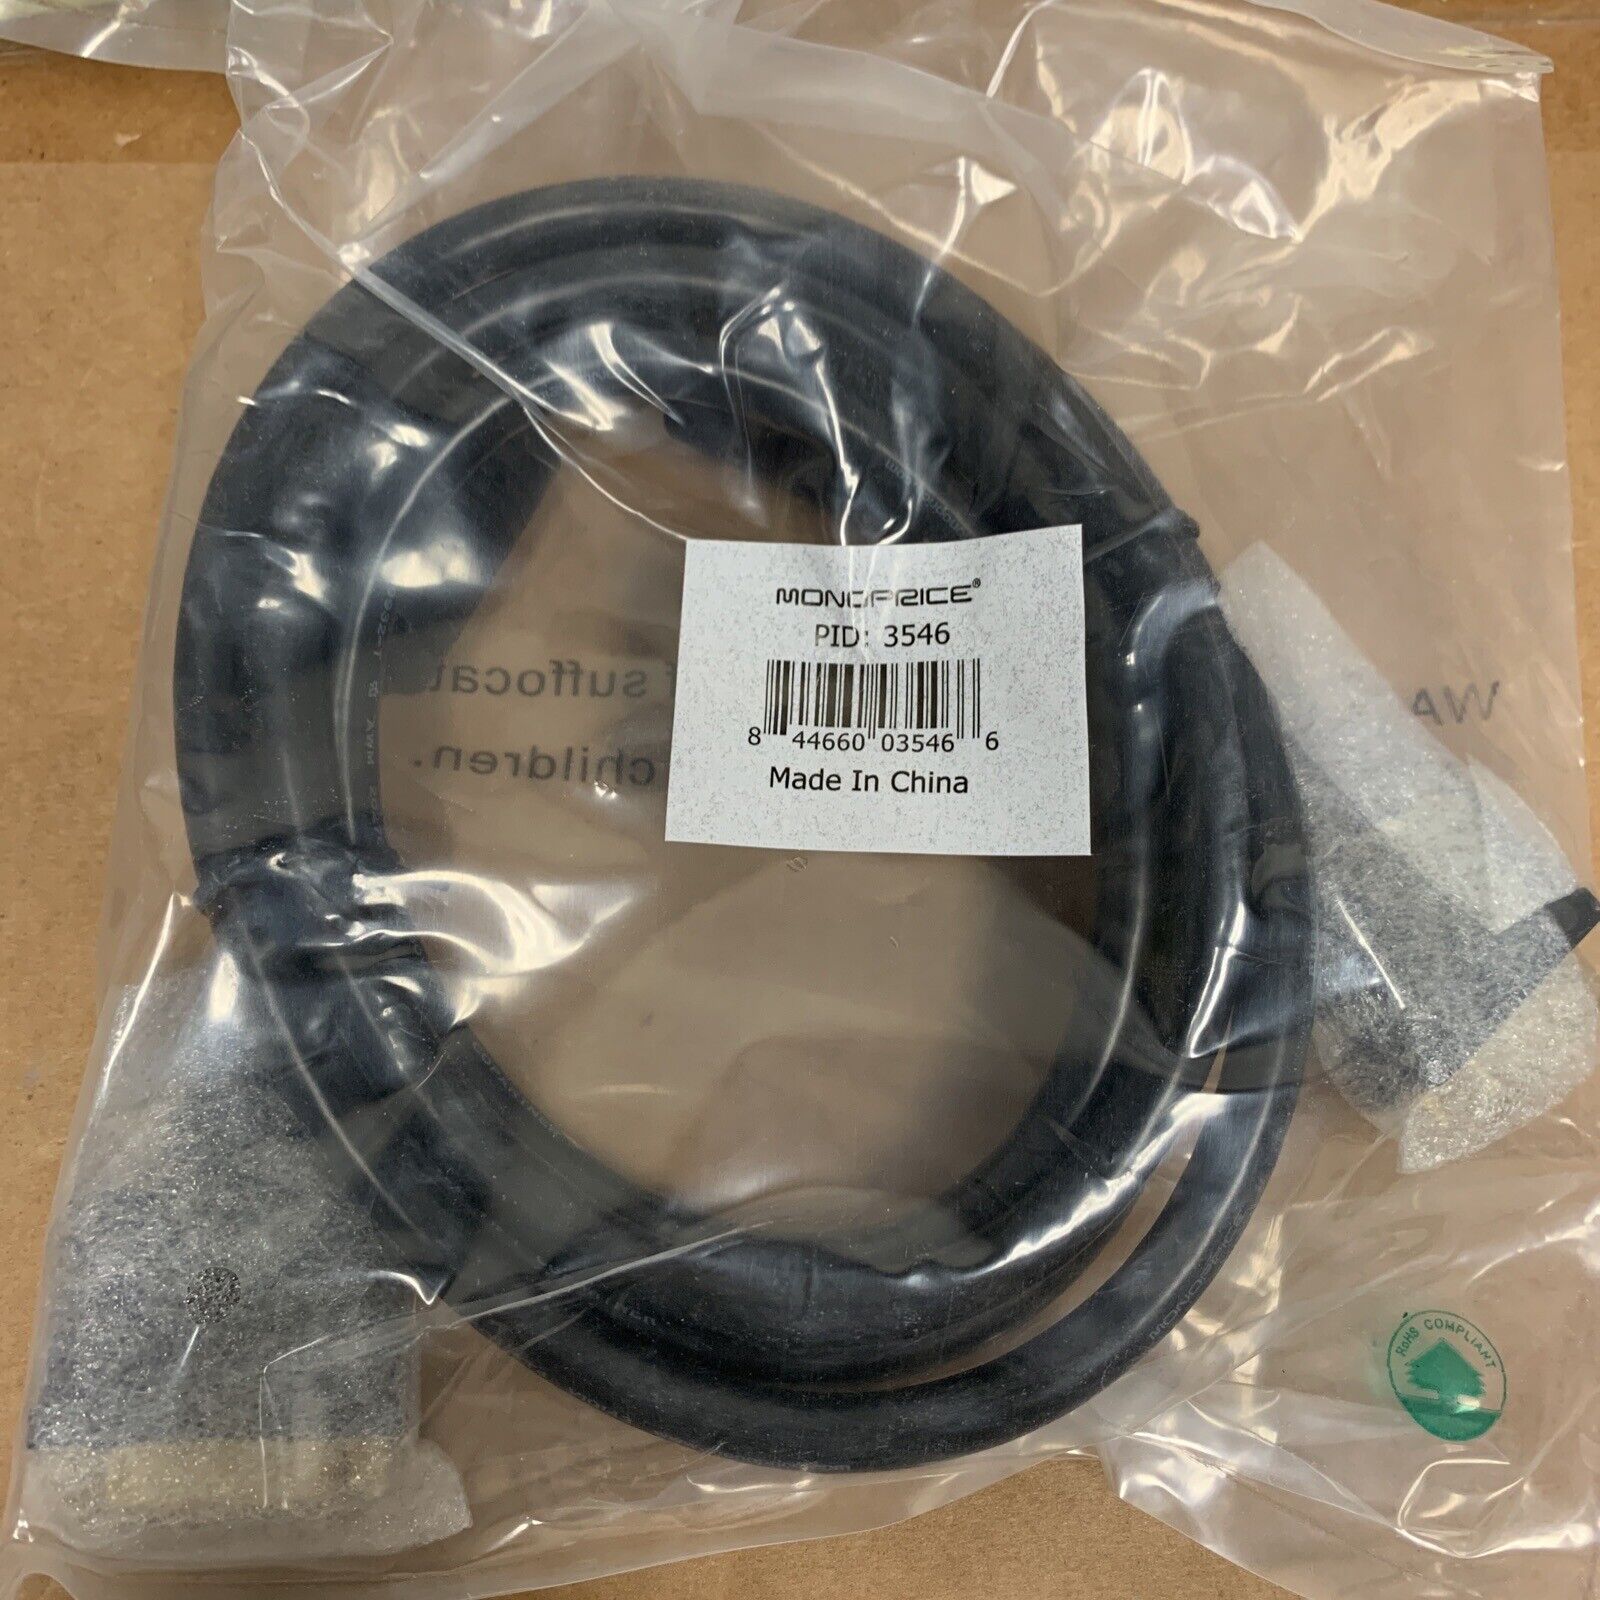 Monoprice 3546 6ft Dual Link DVI-D Male/Female Extension Cable - Black - 6 Feet